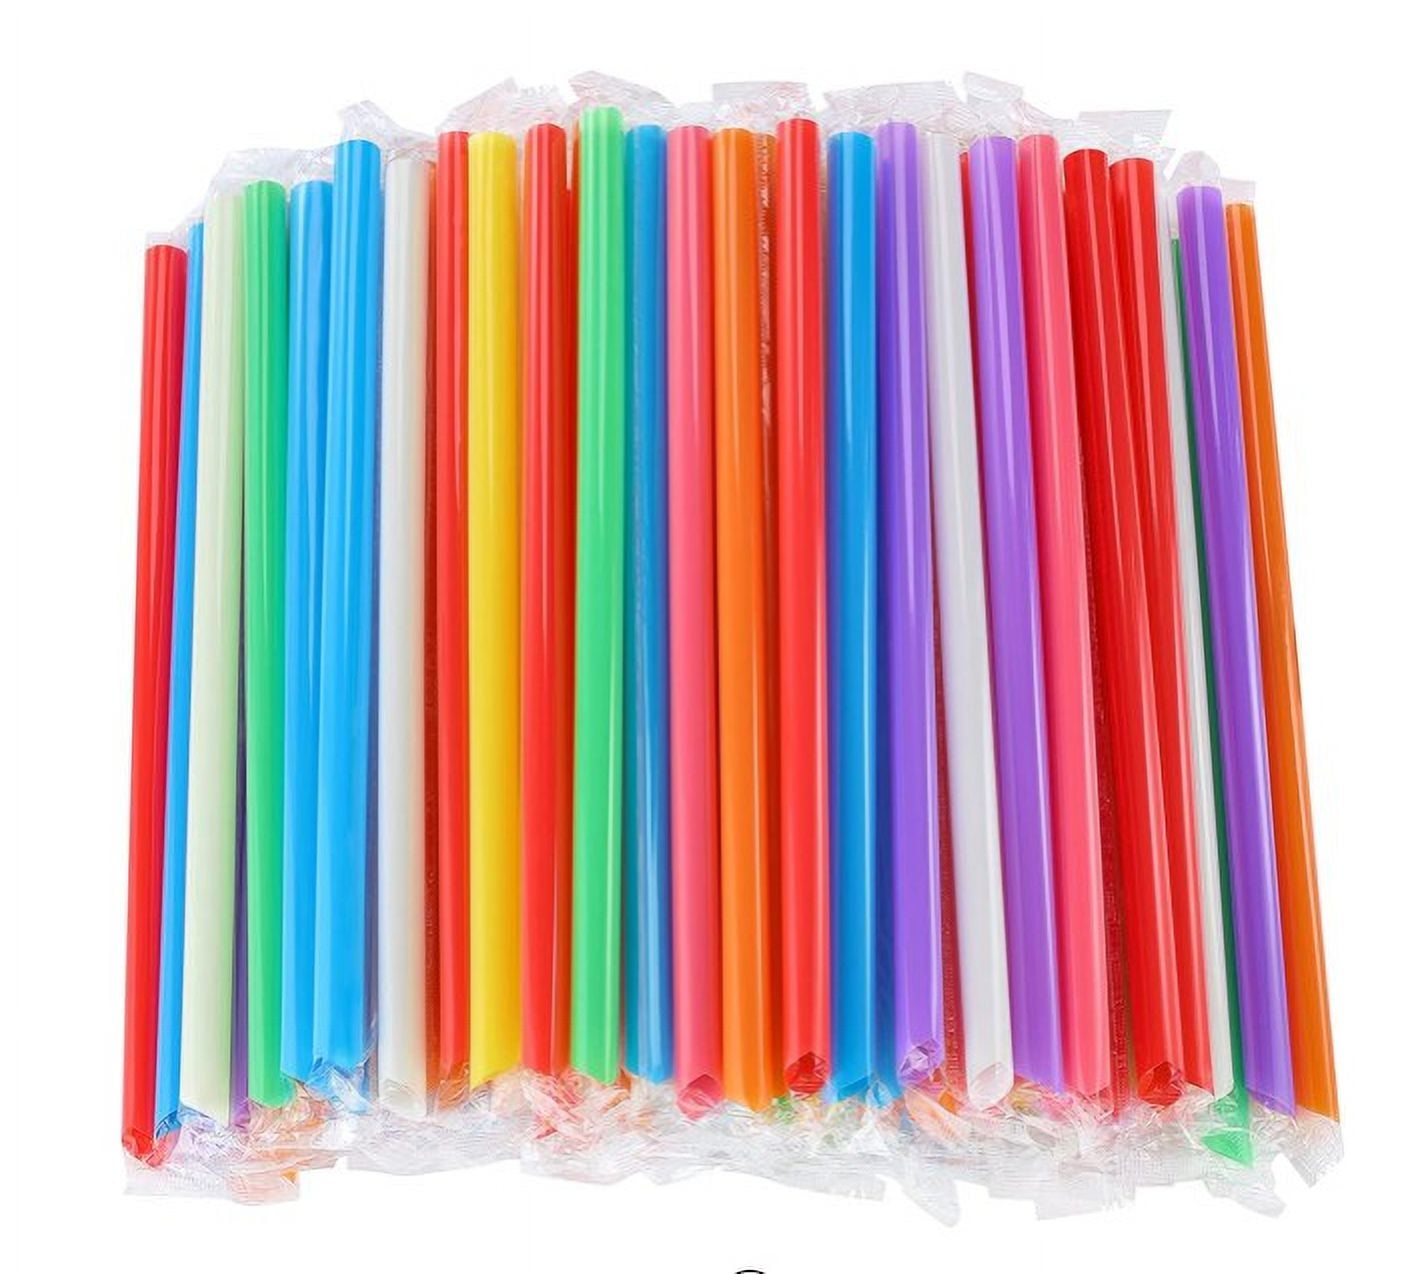  8 Pcs Extra Wide Reusable Boba Straws with 1 Bag & 2 Brushes -  BPA FREE Multicolor Big Jumbo Large Plastic Straws for Smoothies, Bubble  Tea(Tapioca, Boba Pearls), Milkshakes : Home & Kitchen